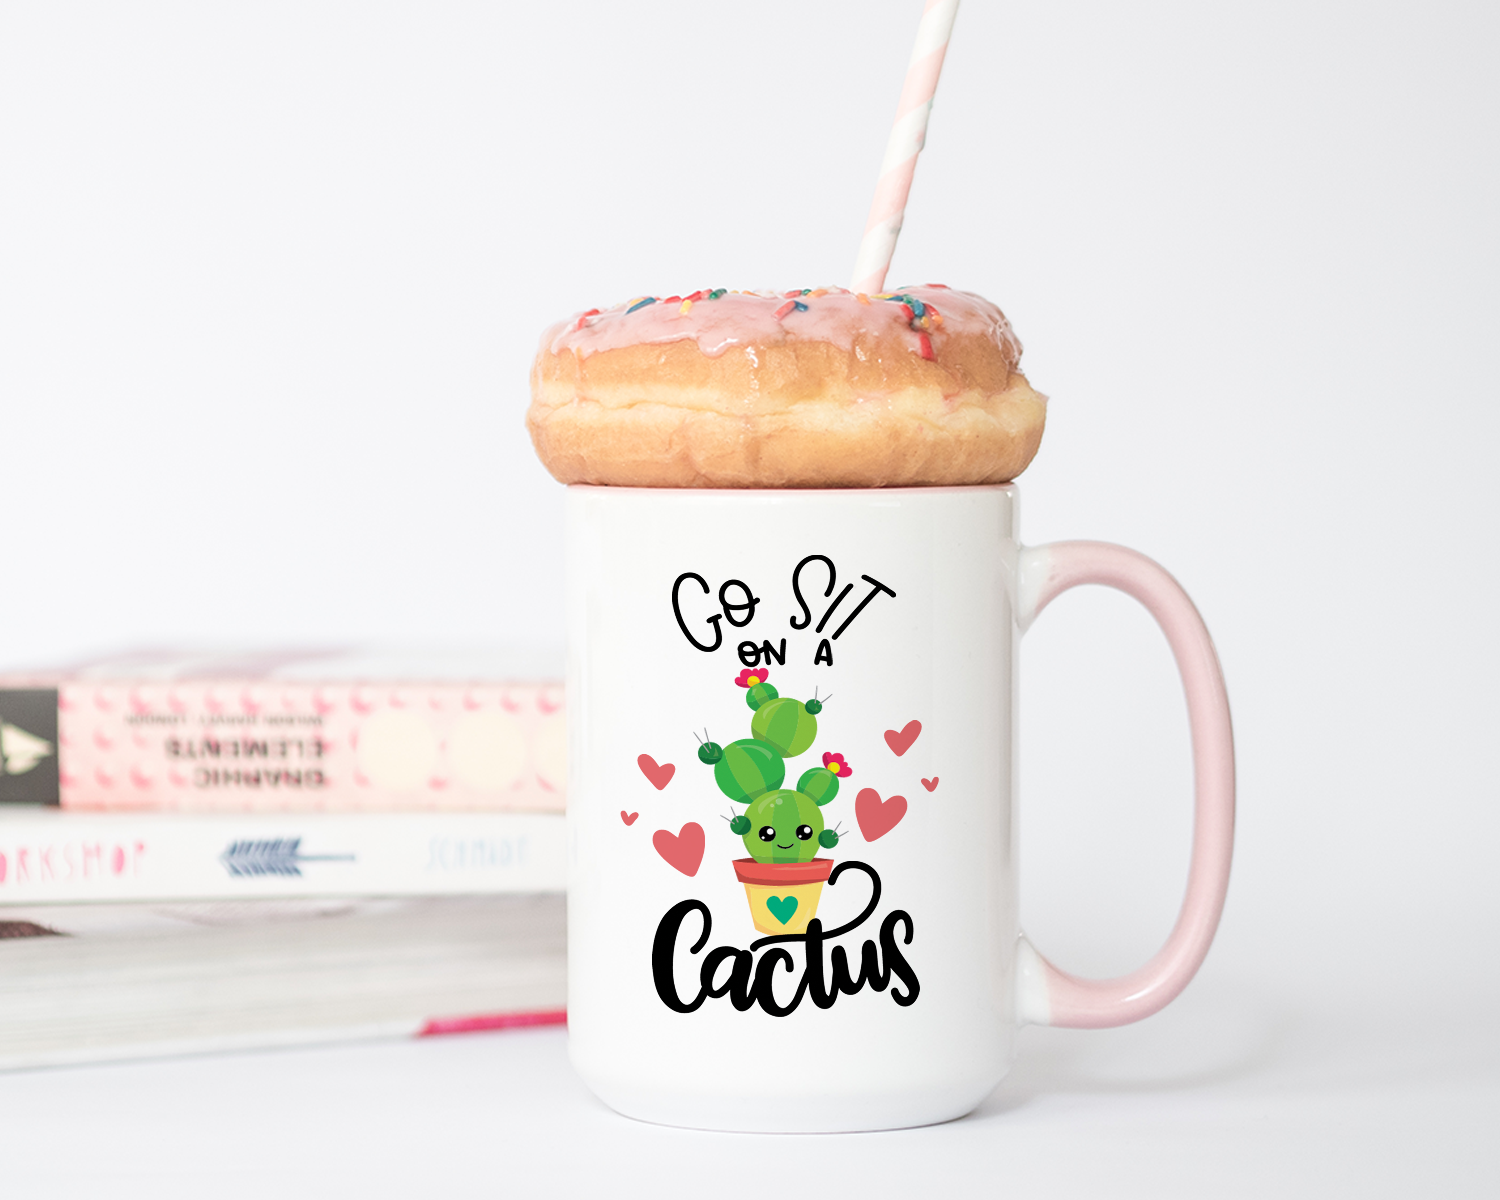 Go Sit On A Cactus Coffee Mug